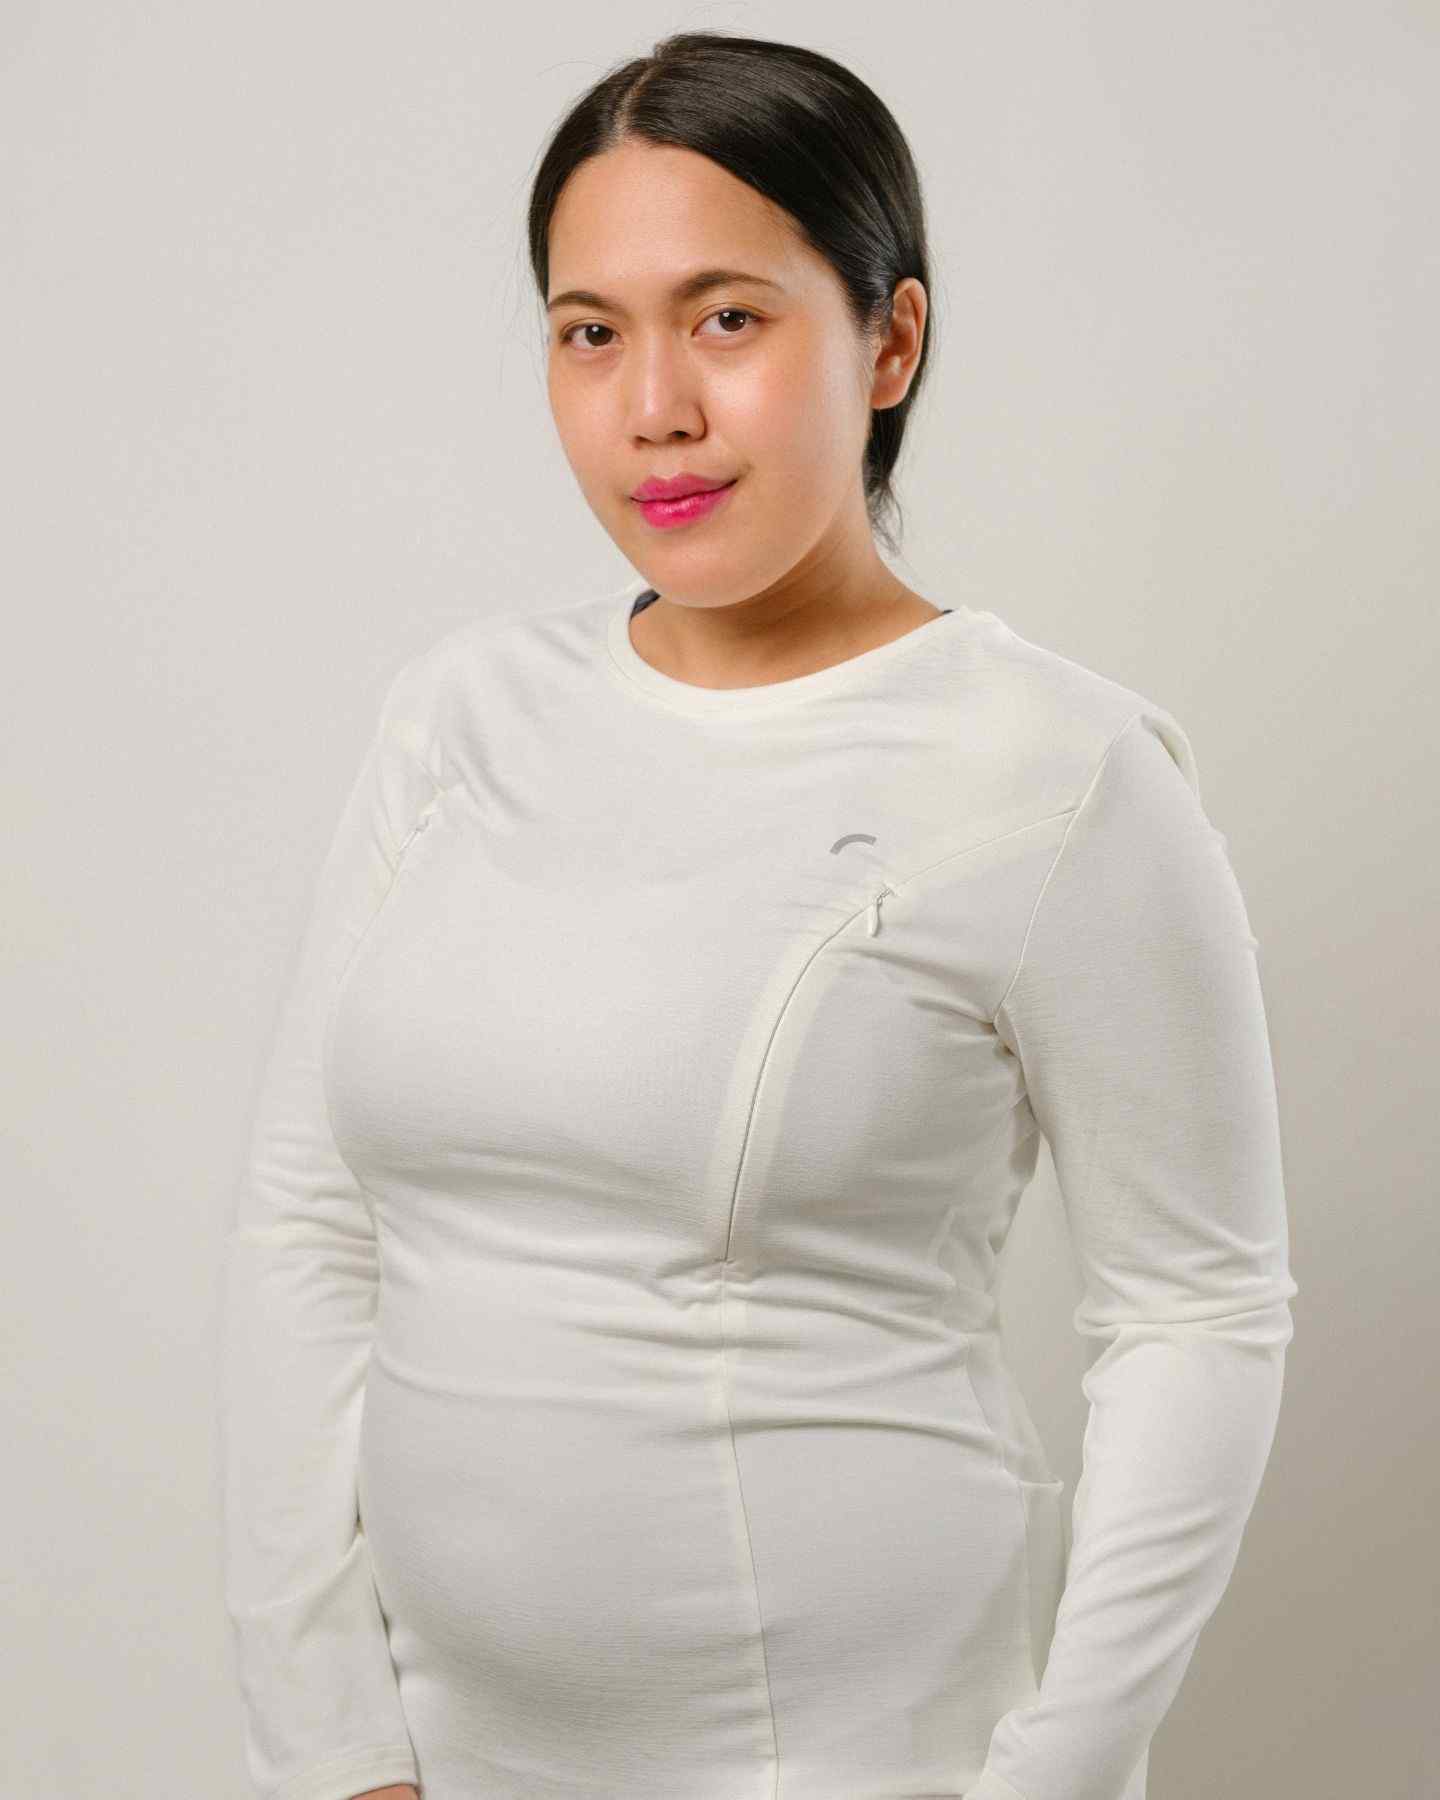 Ruuji Maternity Long Sleeve Top in White